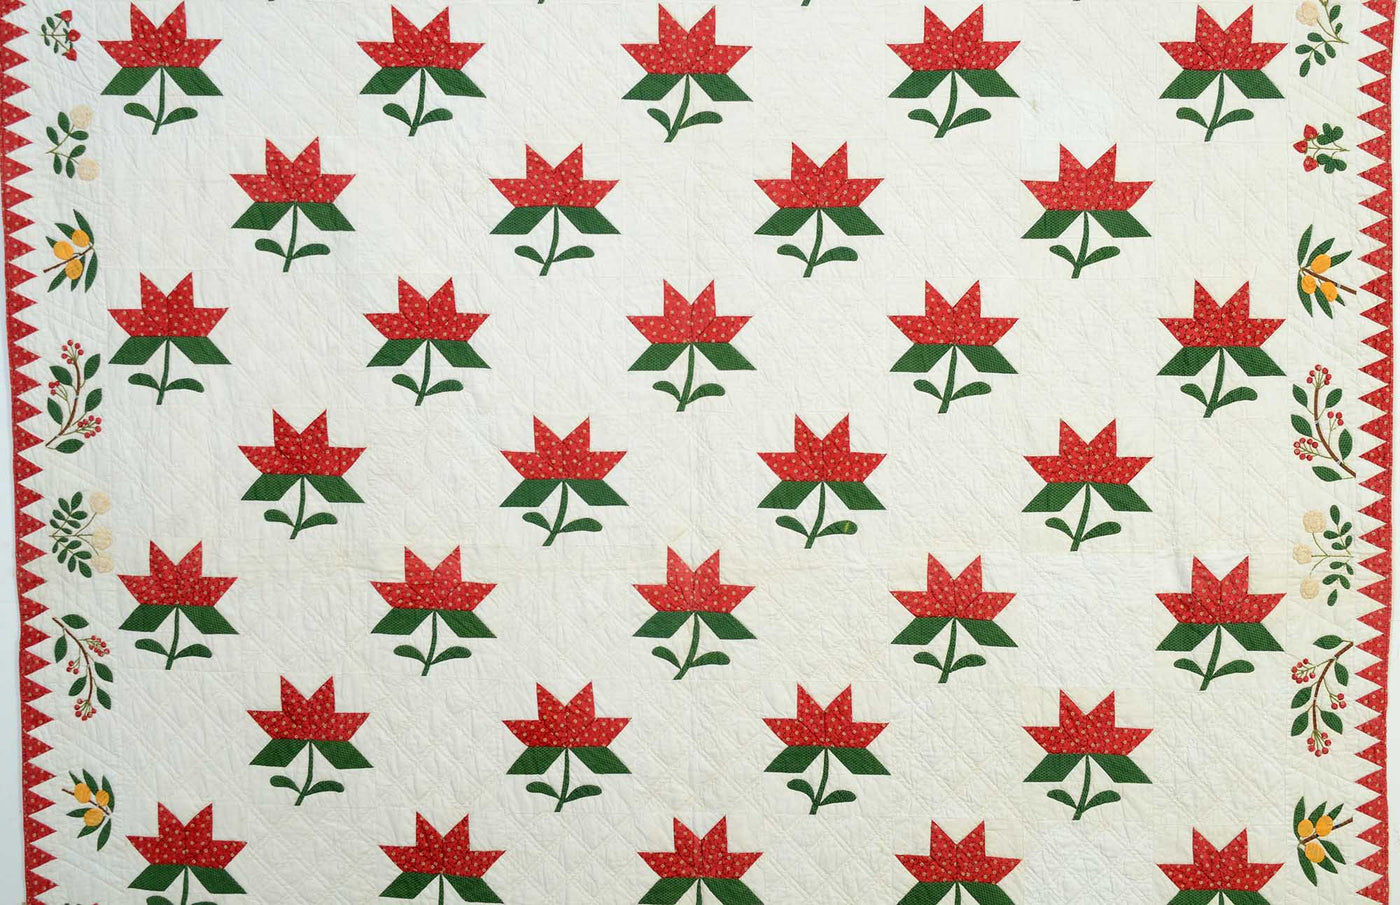 maple-leaf-quilt-with-botanical-border-1410995-detail-1